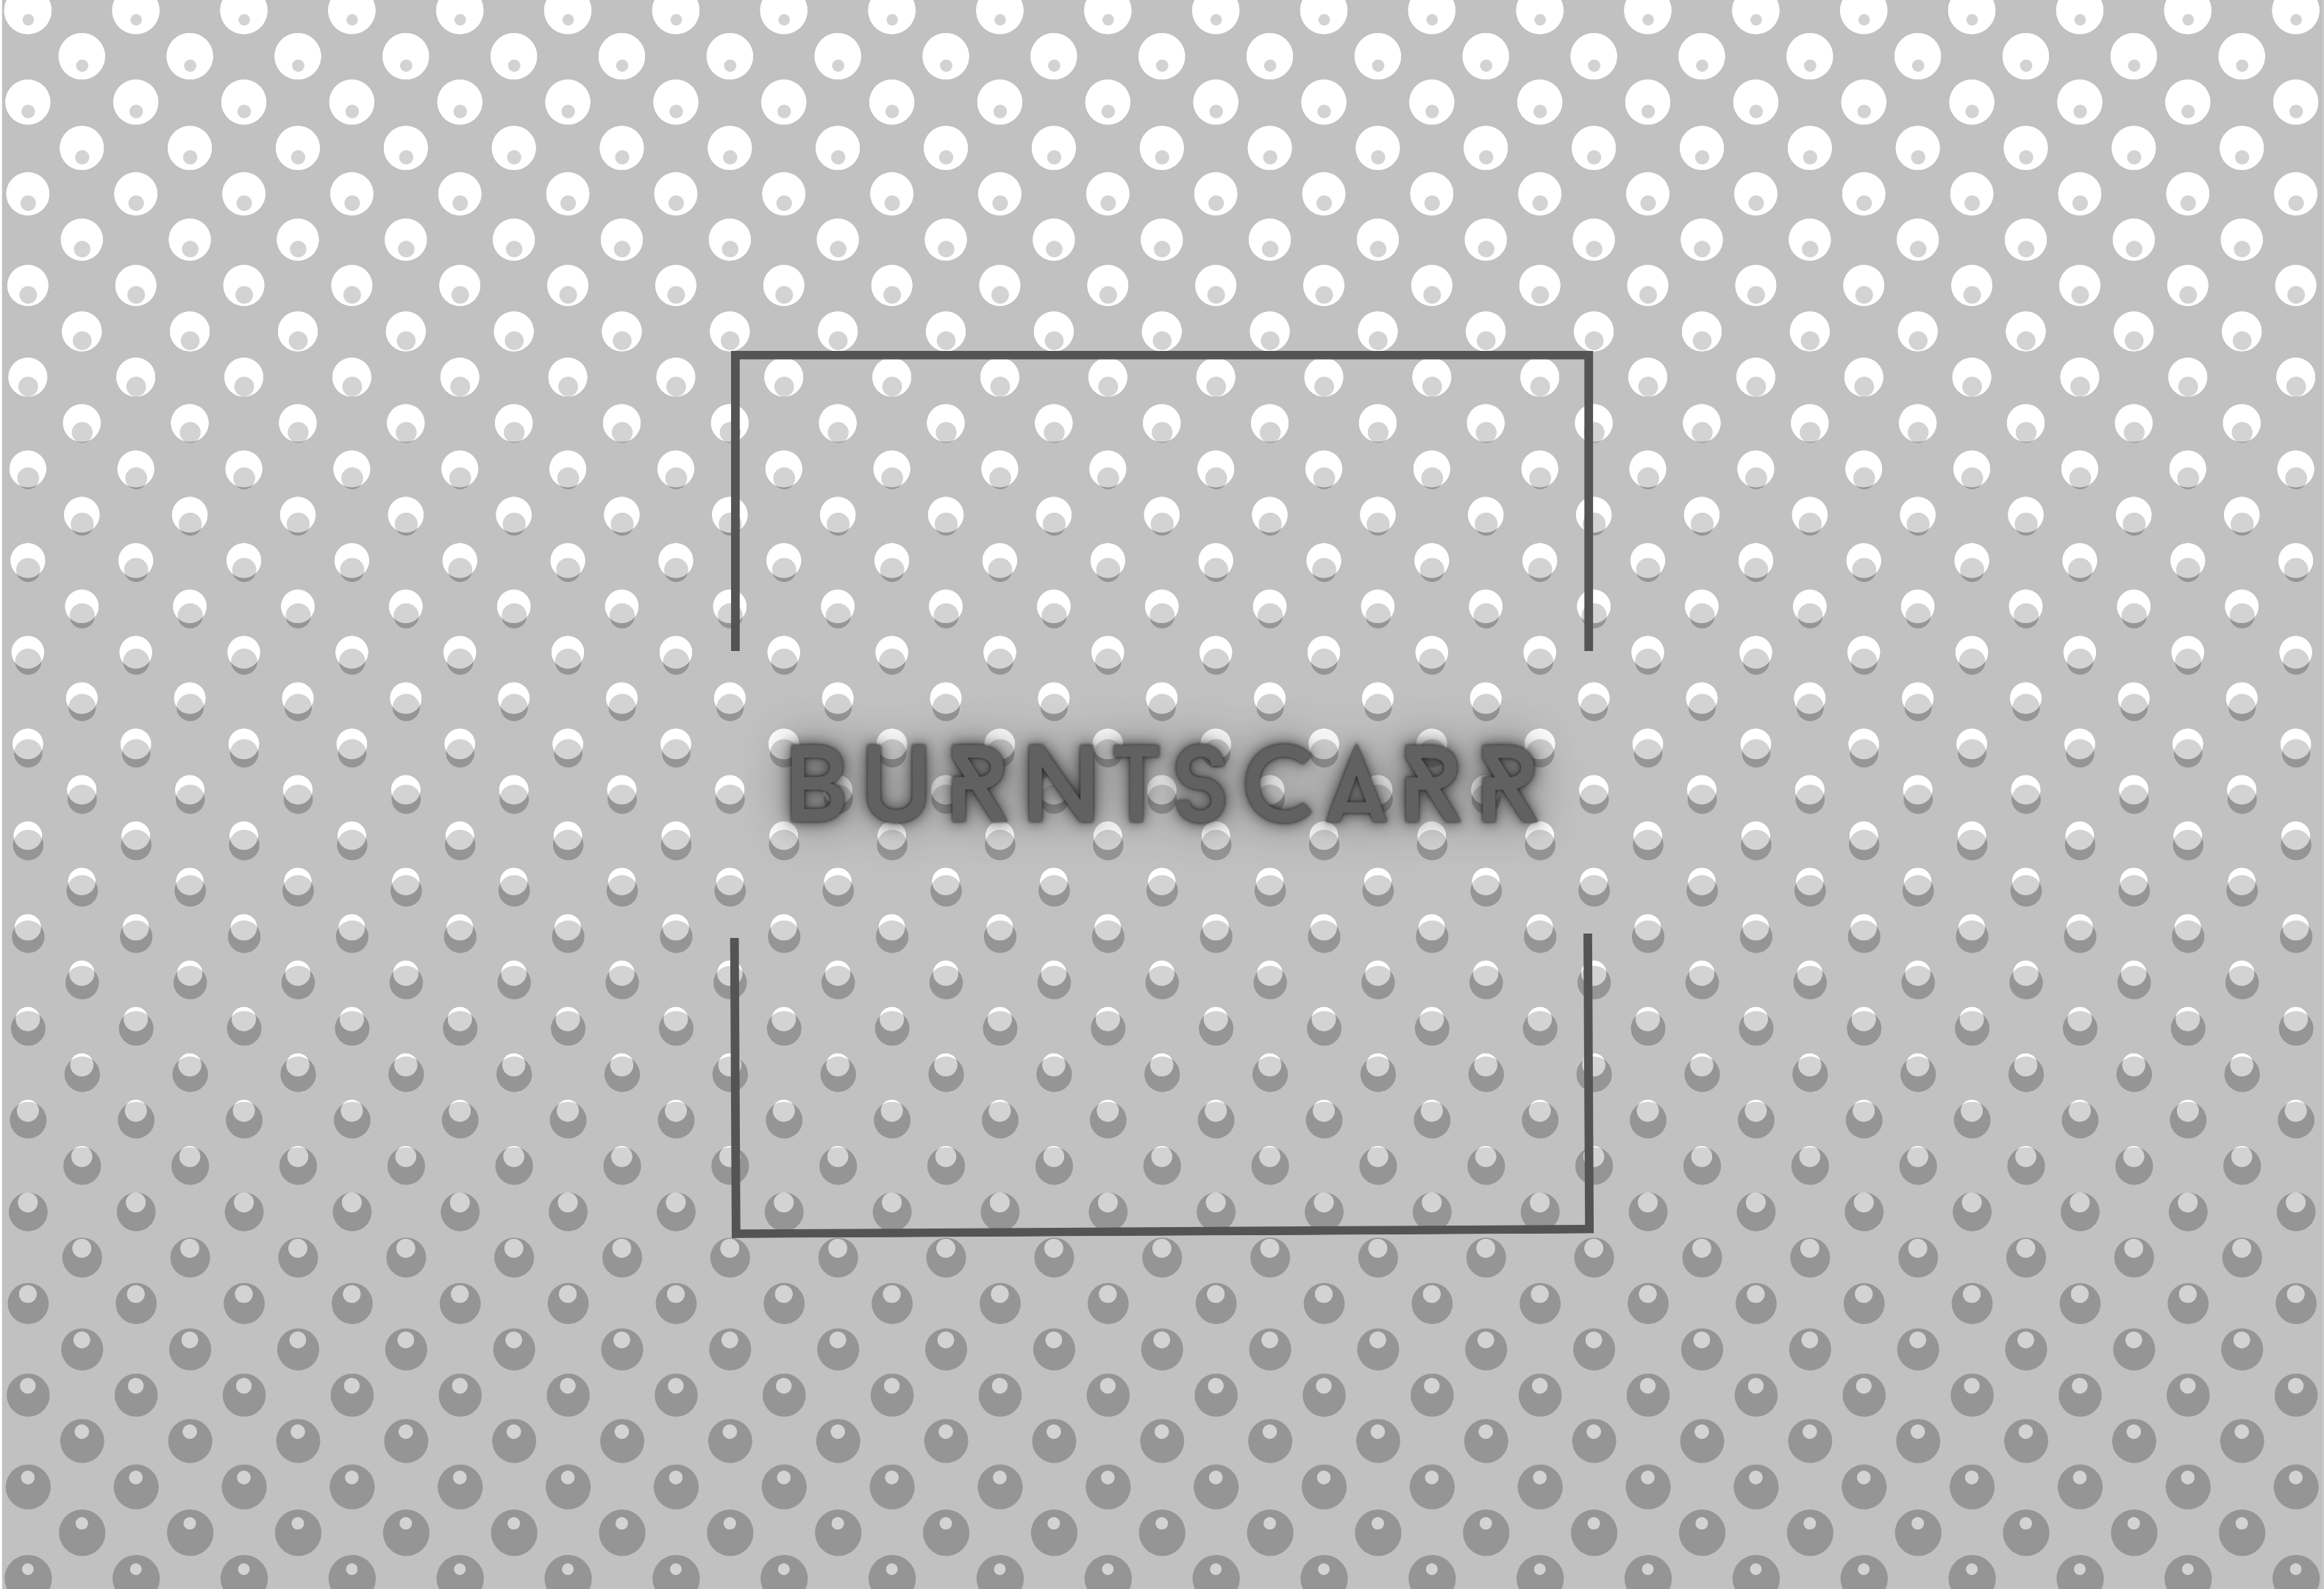 burntscarr - Rockstar In Da Club